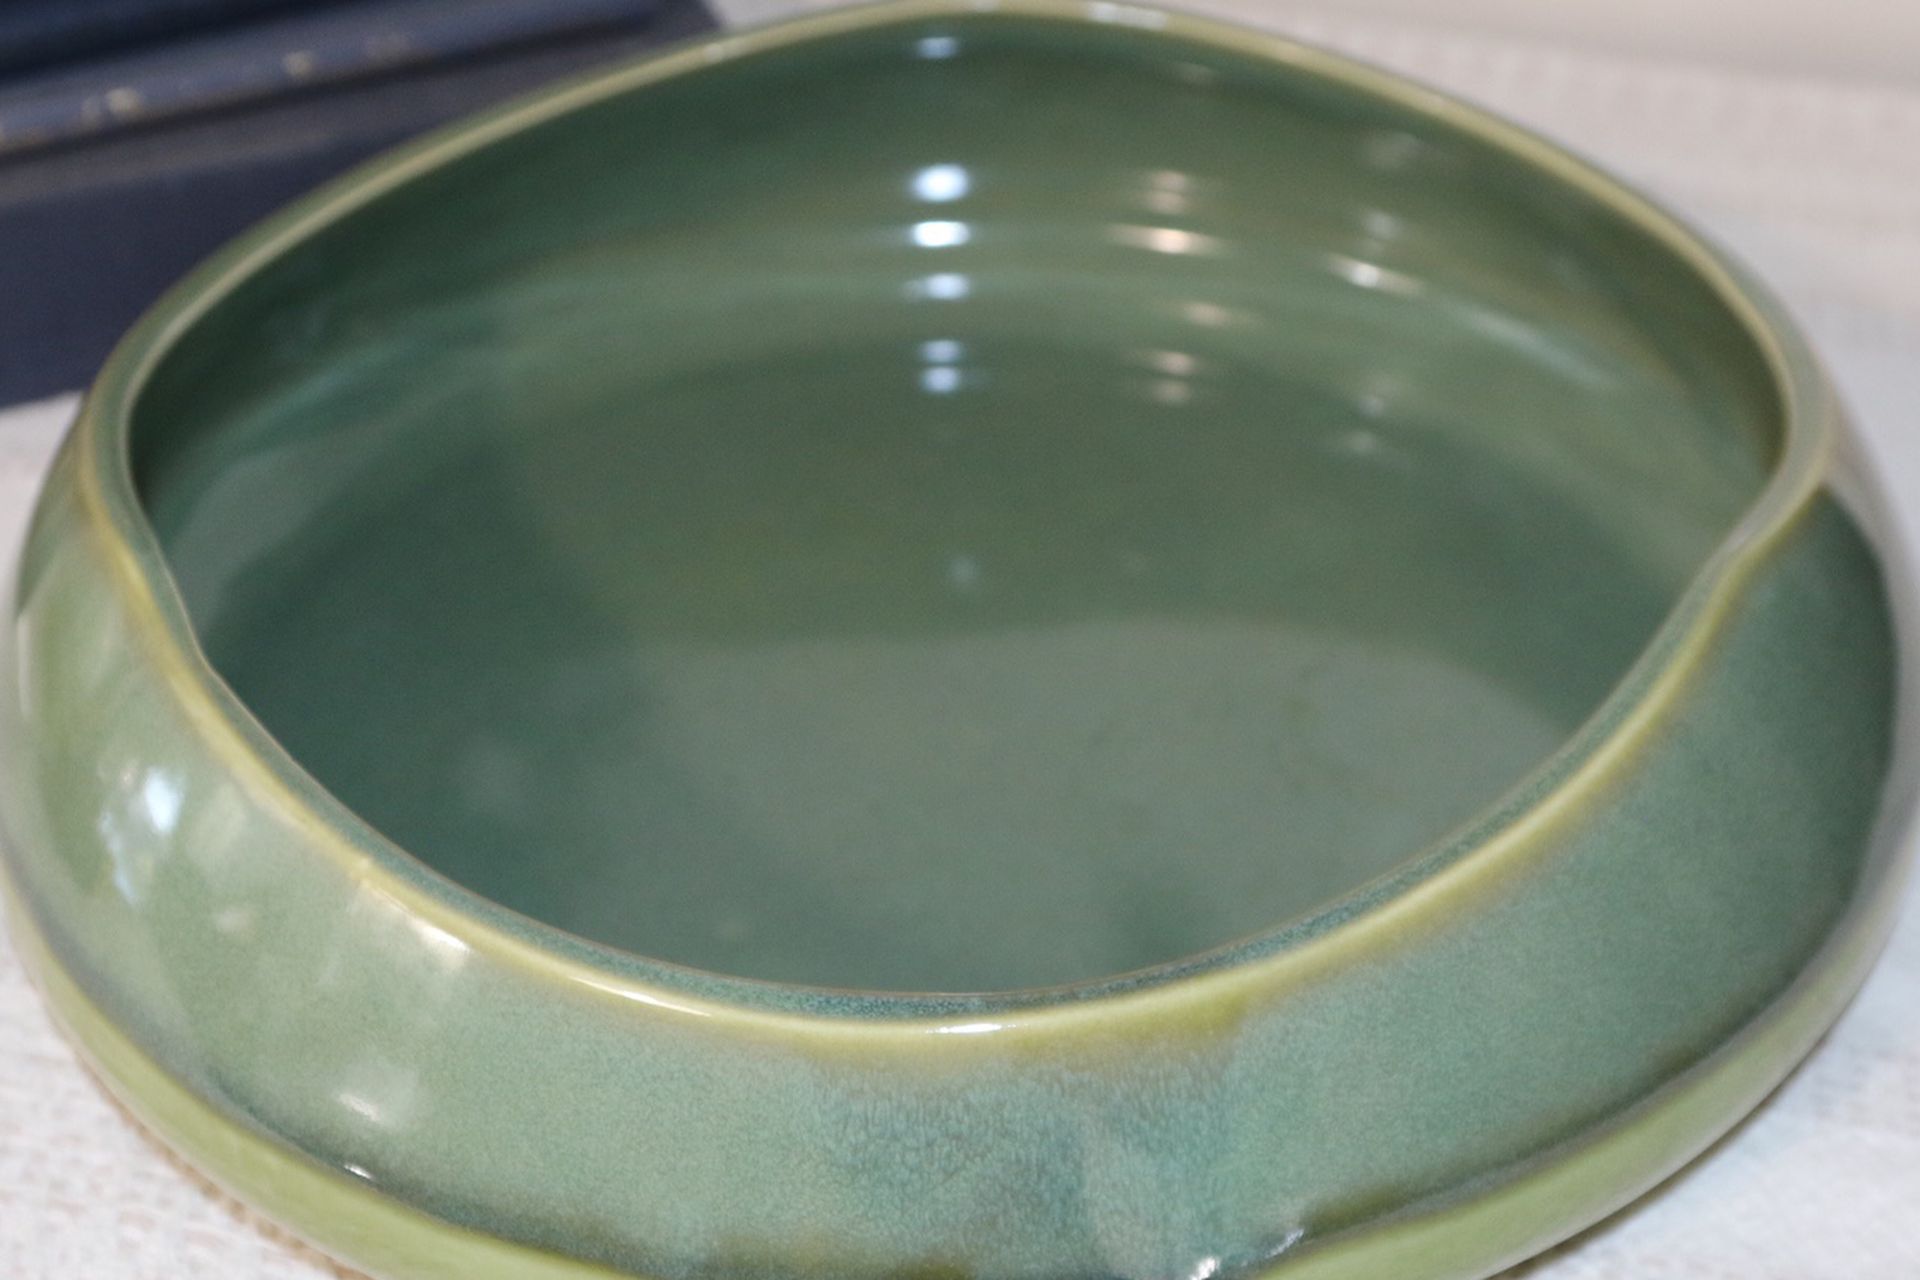 Gorgeous Boho Chic or Coastal Sea Green ceramic decorative bowl by Partylite